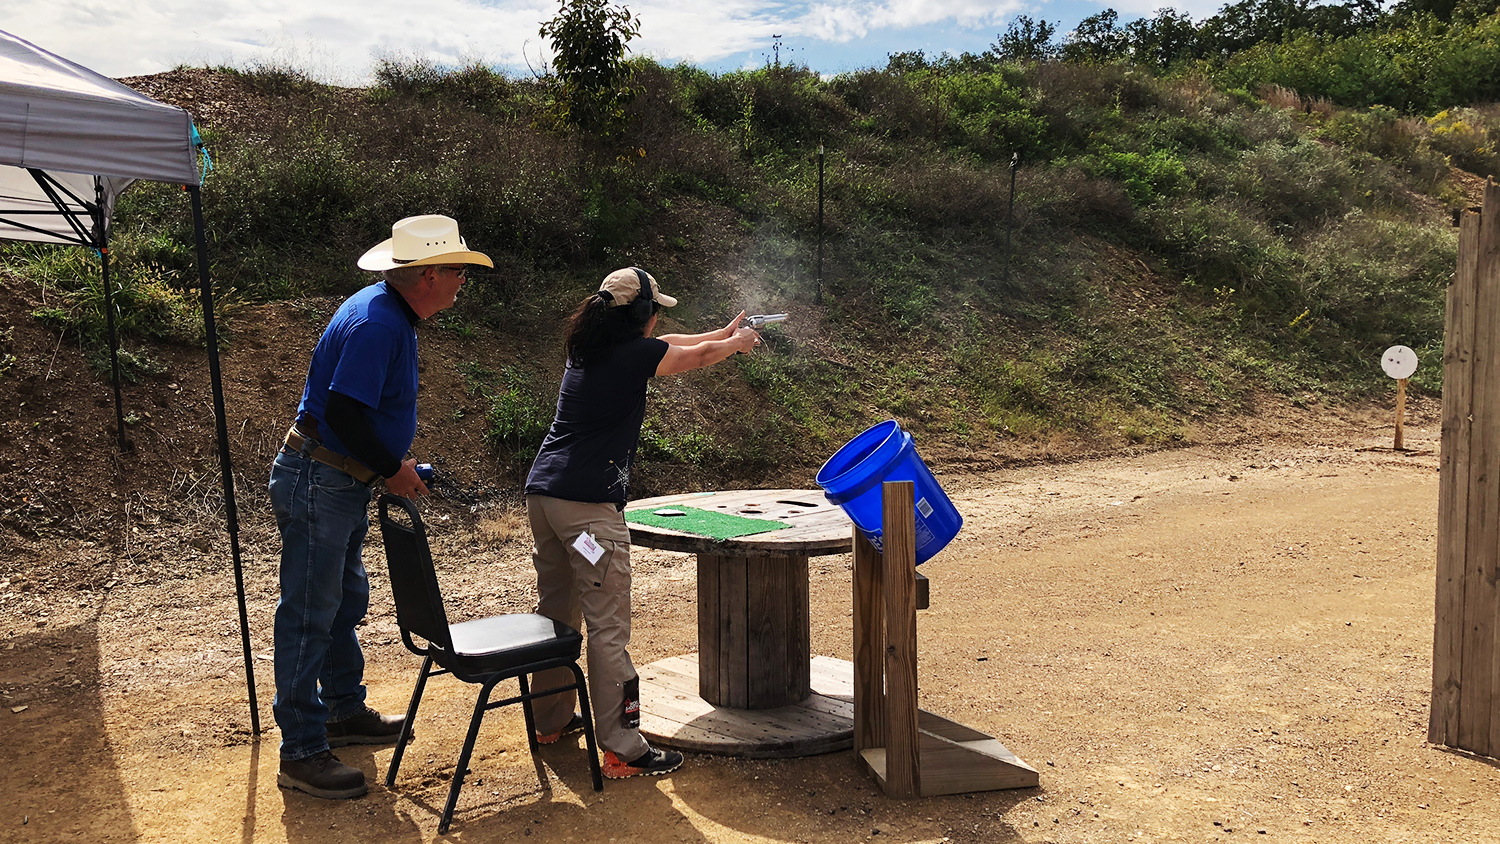 Cowboy Action Shooting | NRA World Shooting Championship